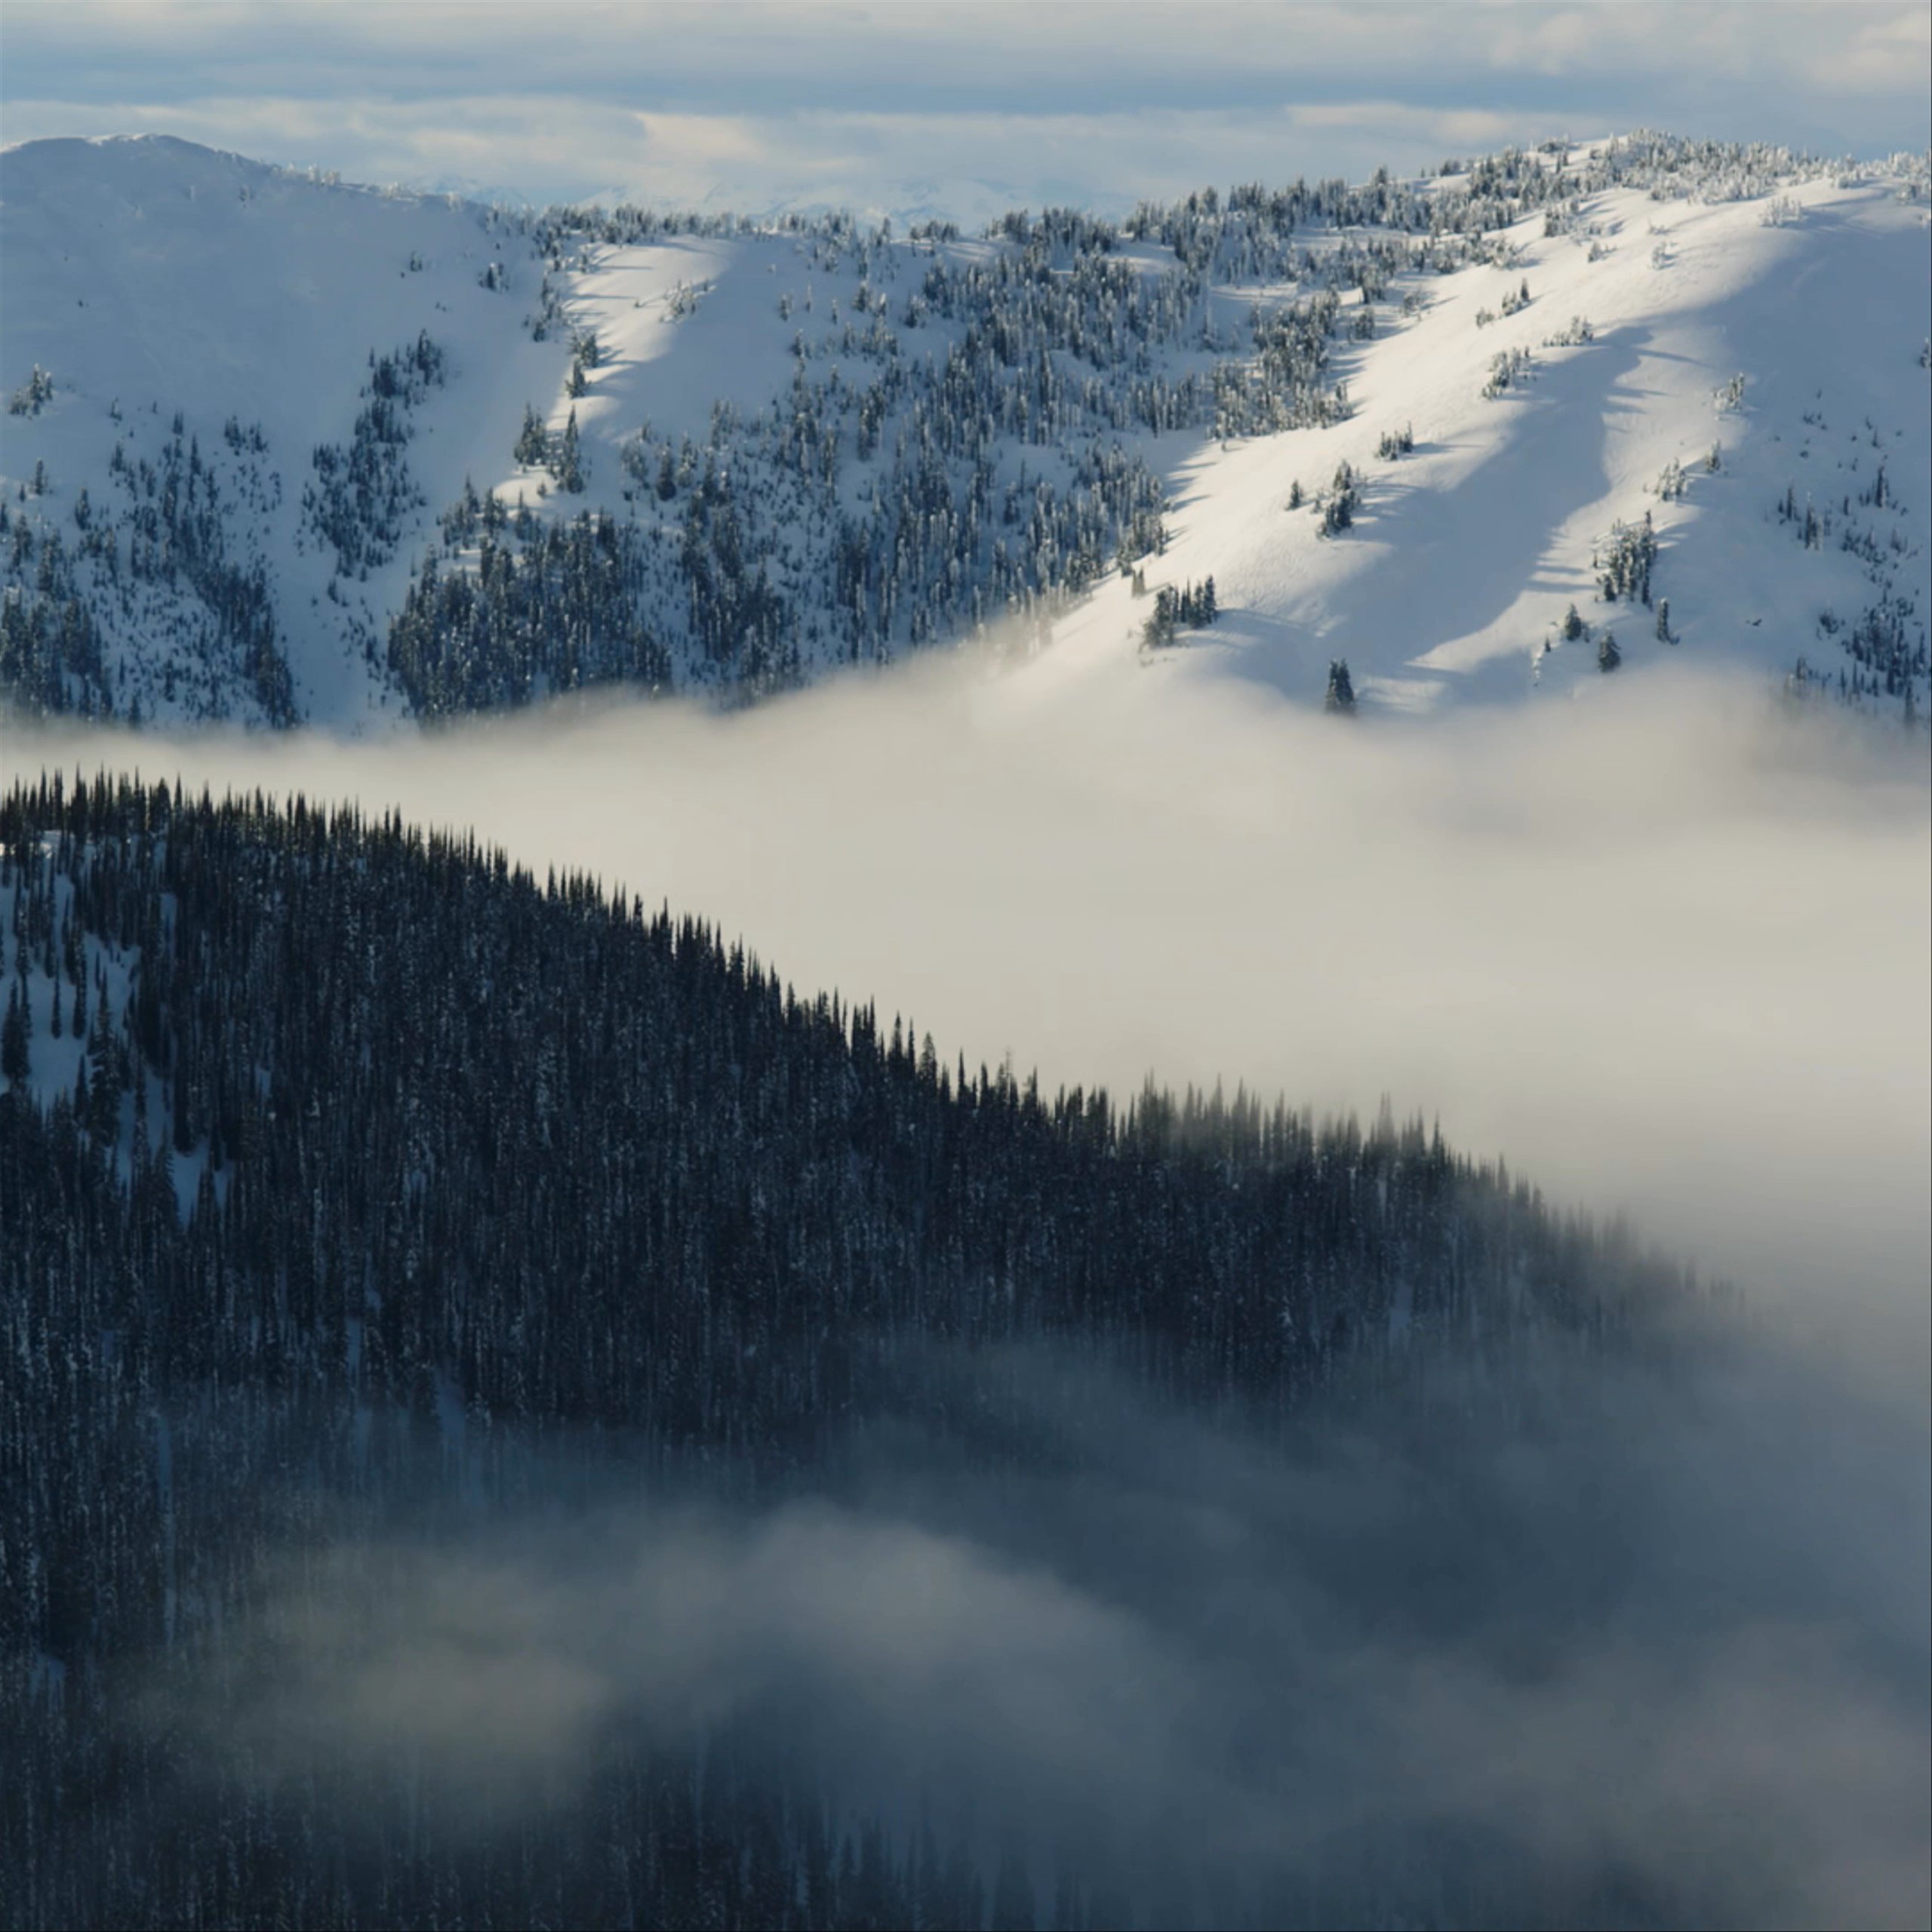 Timelapse of fog rolling through snowy Alaskan mountains